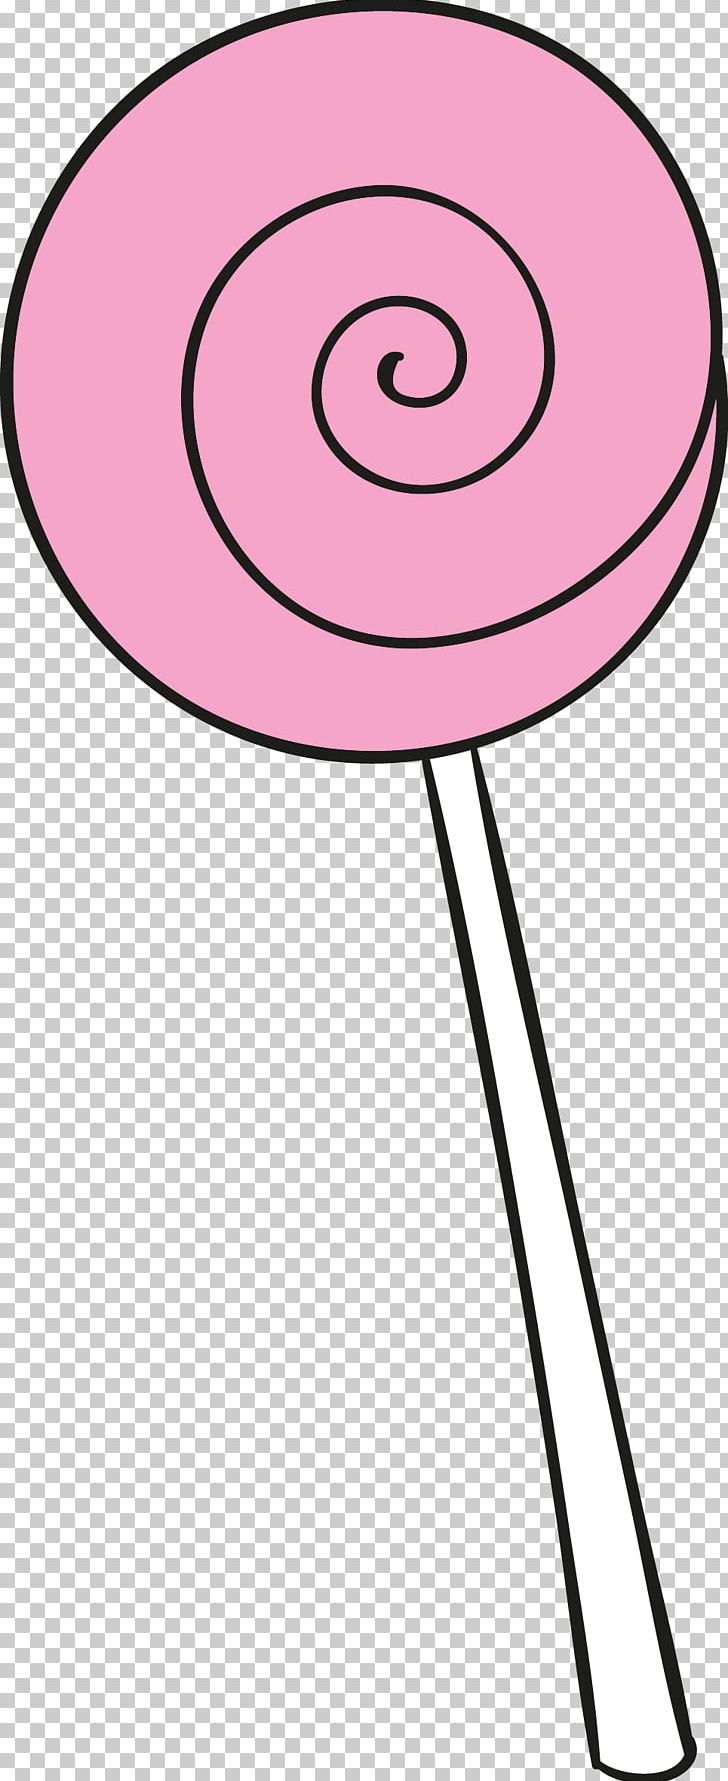 Lollipop Cartoon Pink PNG, Clipart, Area, Candy, Candy Lollipop, Cartoon, Cartoon Lollipop Free PNG Download